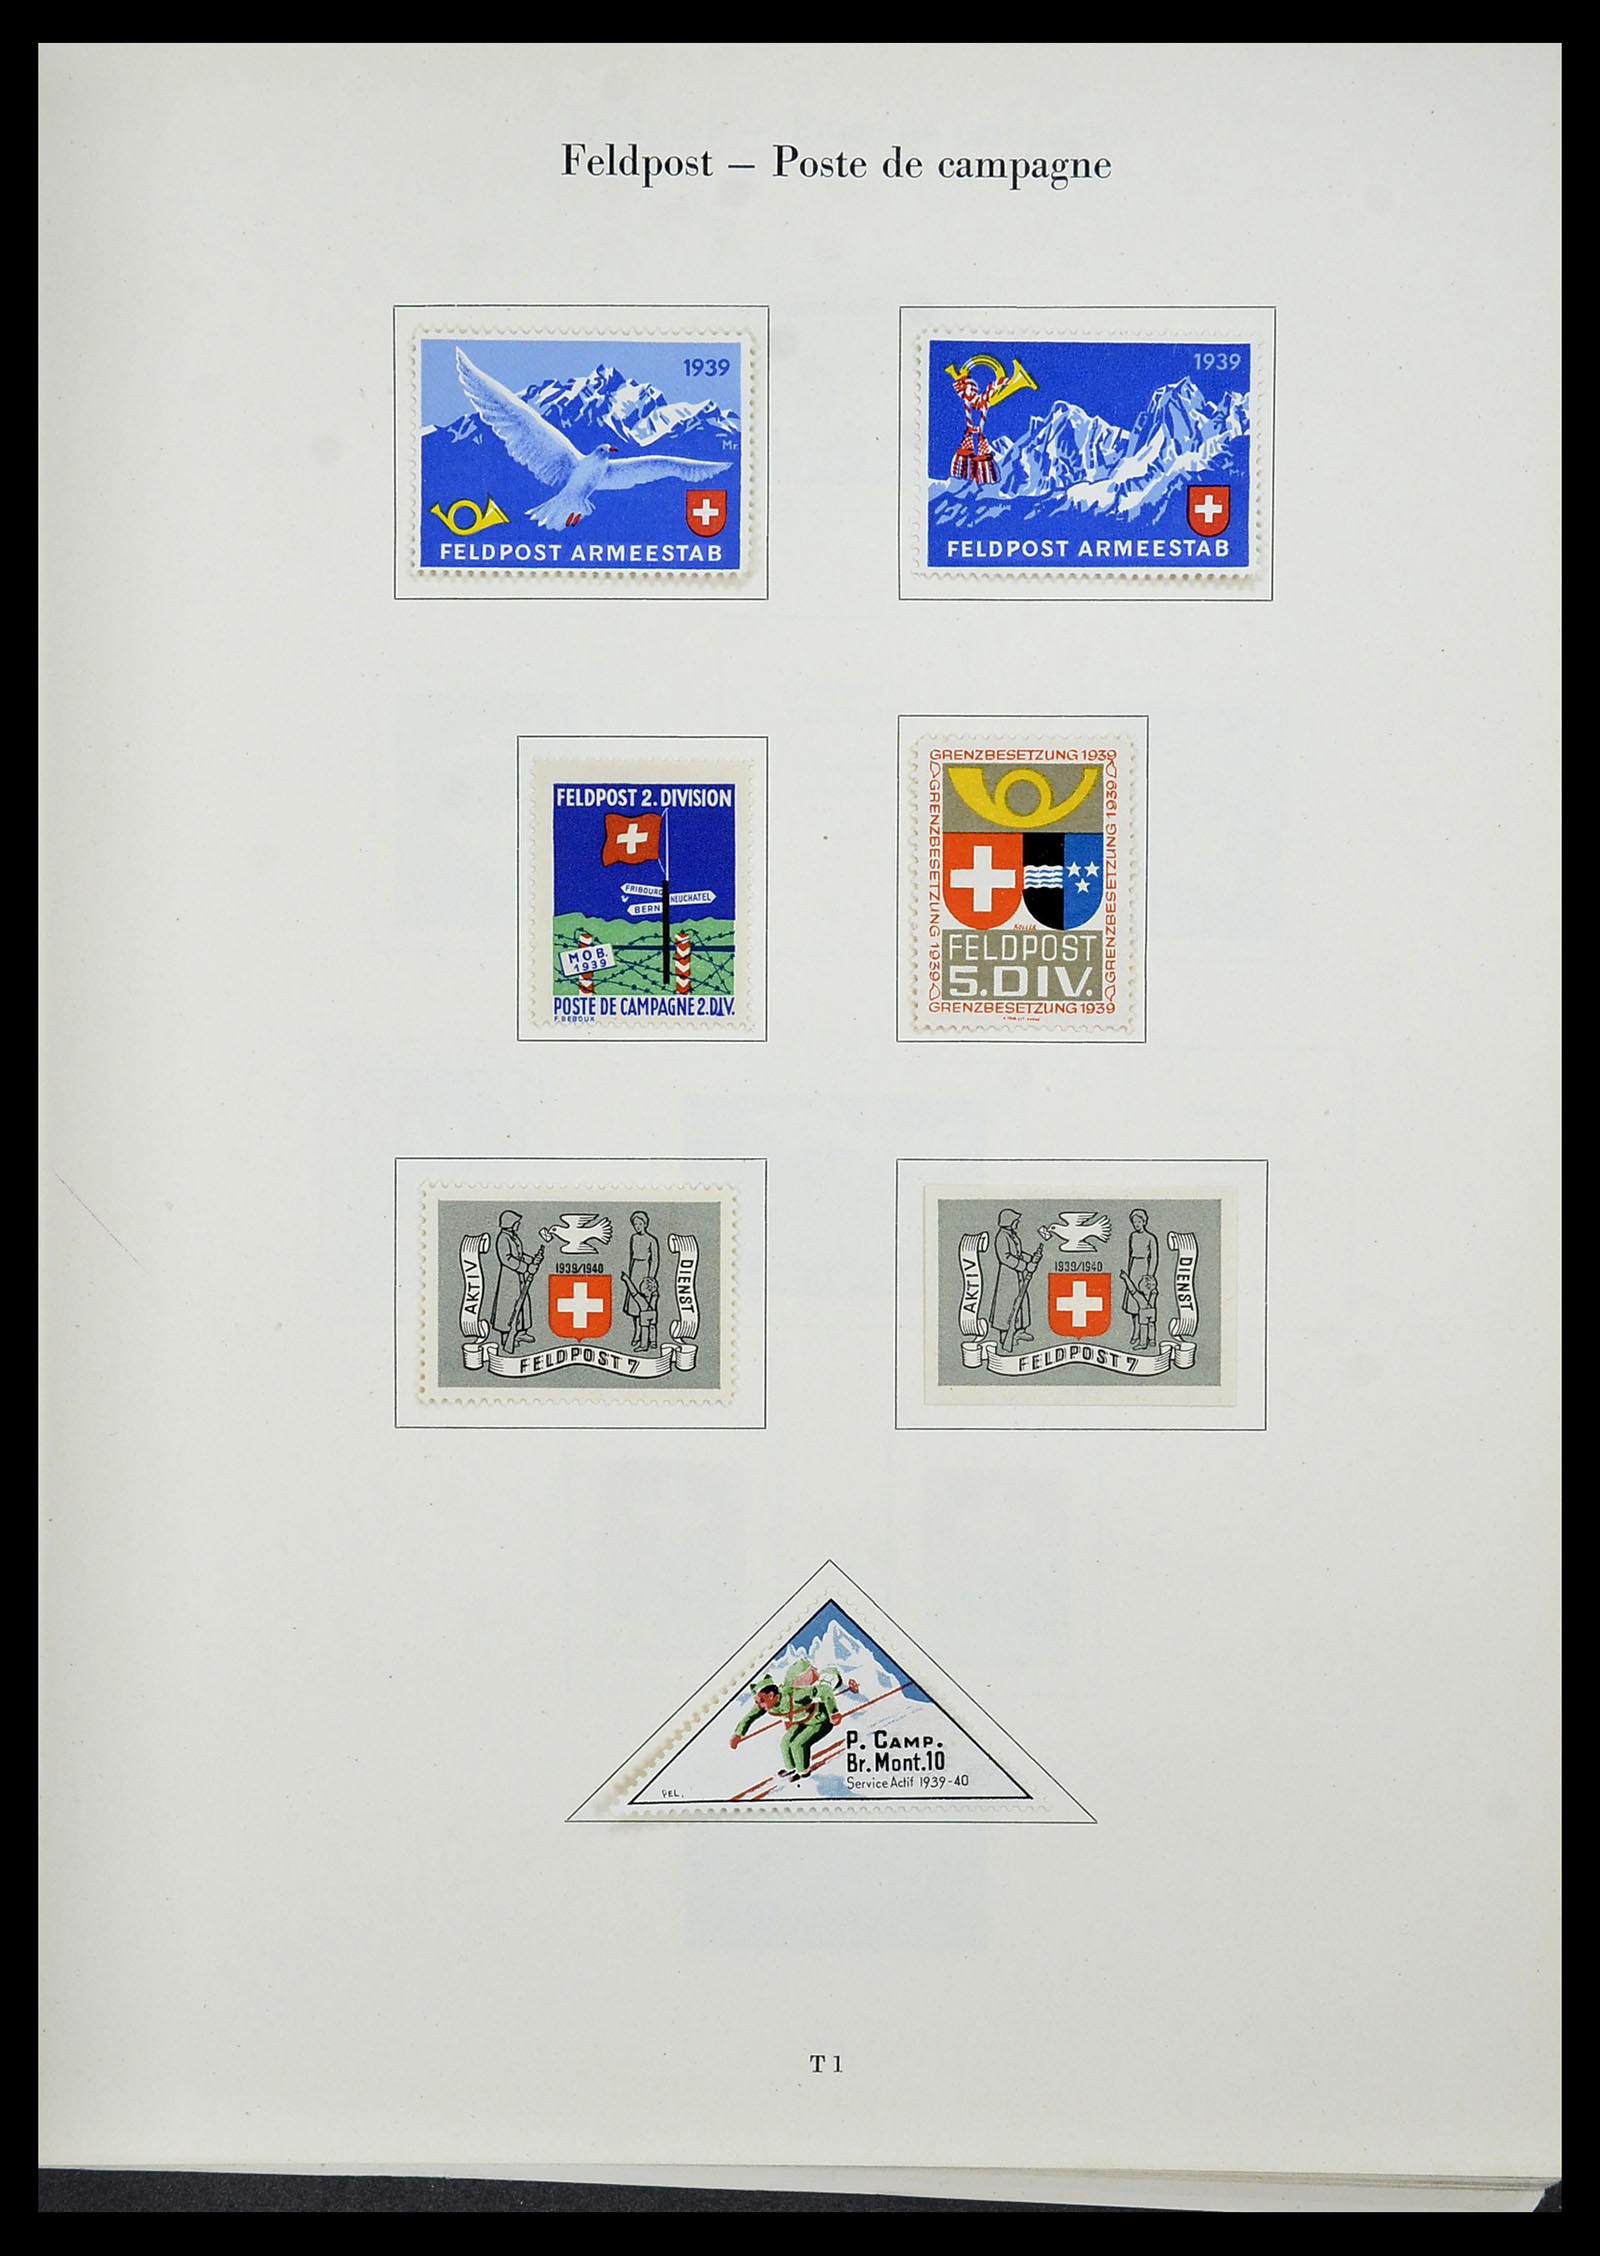 34234 314 - Stamp collection 34234 Switzerland soldier stamps 1939-1945.